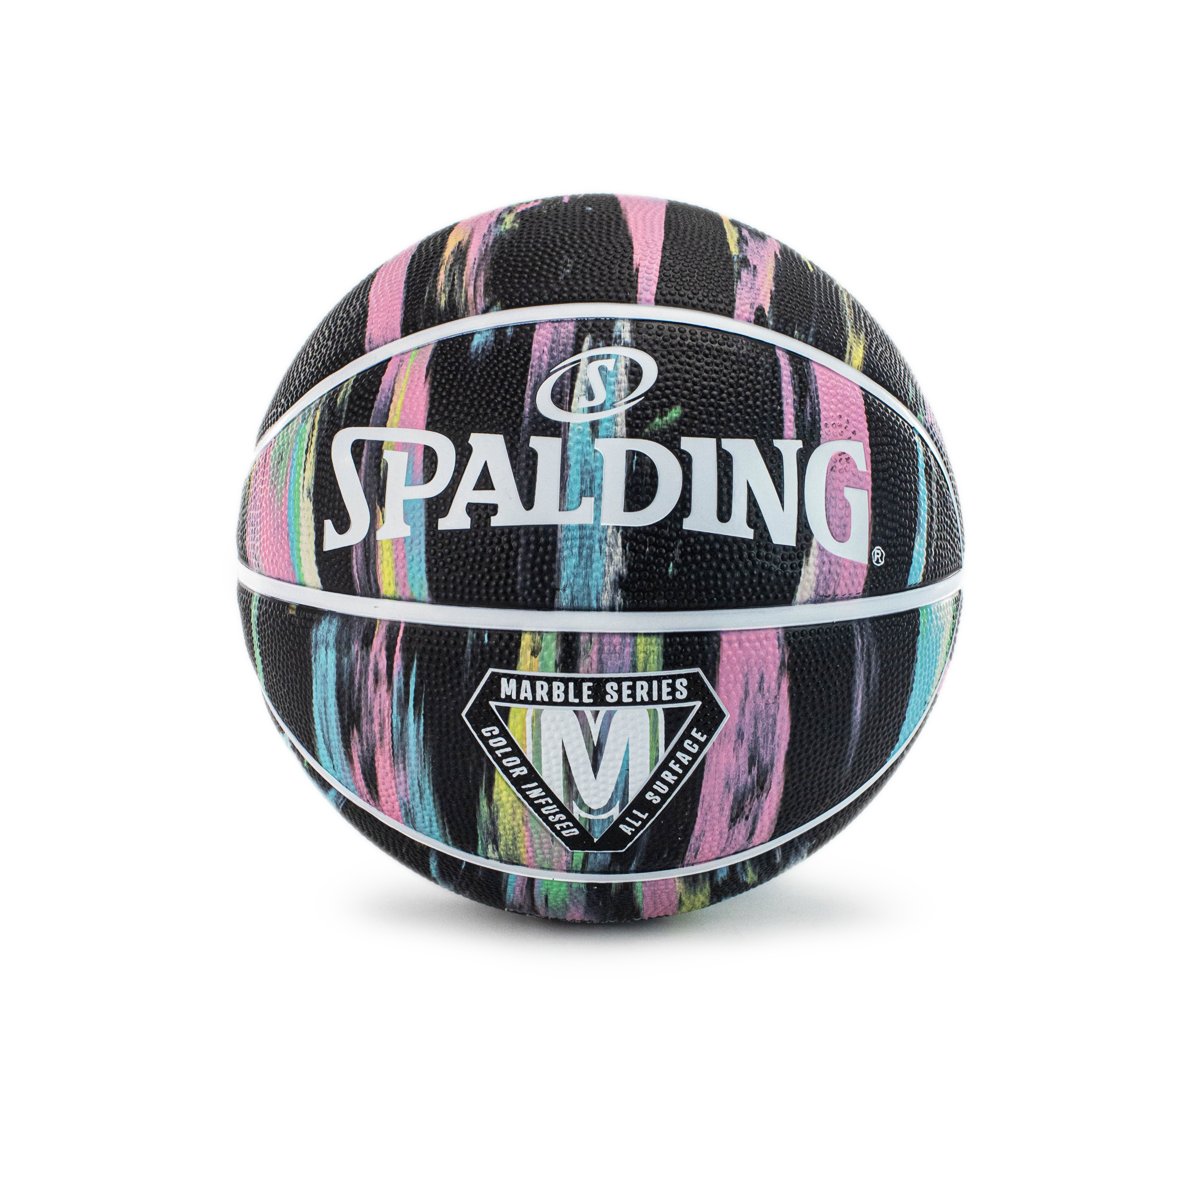 Spalding Marble Series Black Pastel Rubber Basketball Größe 5 84418Z-